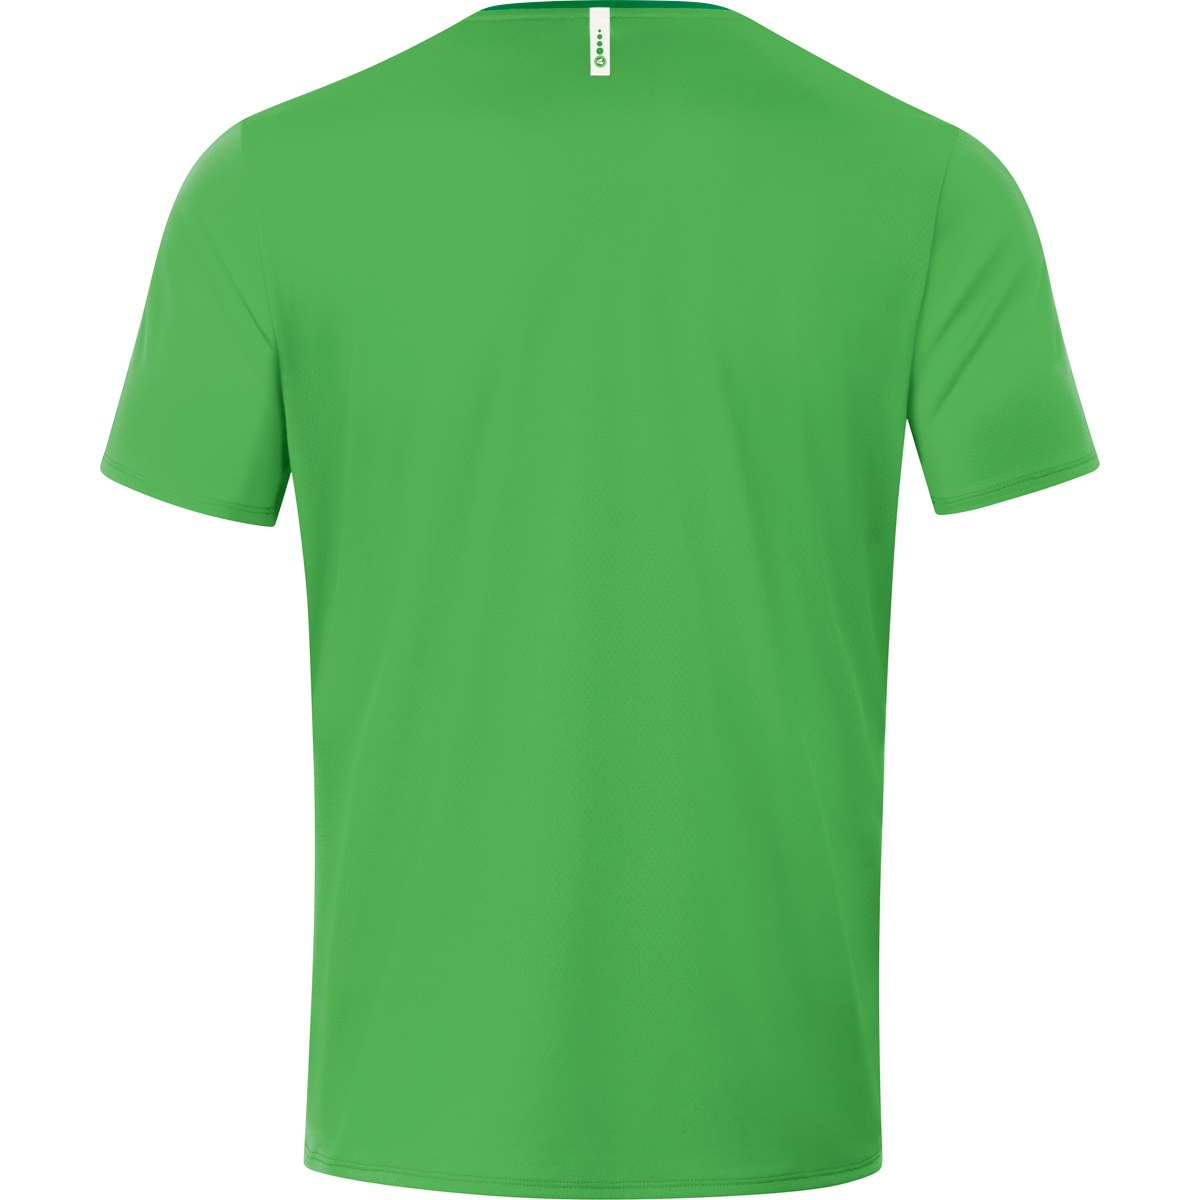 116, JAKO Champ T-Shirt 6120 Gr. green/sportgrün, soft 2.0 Kinder,